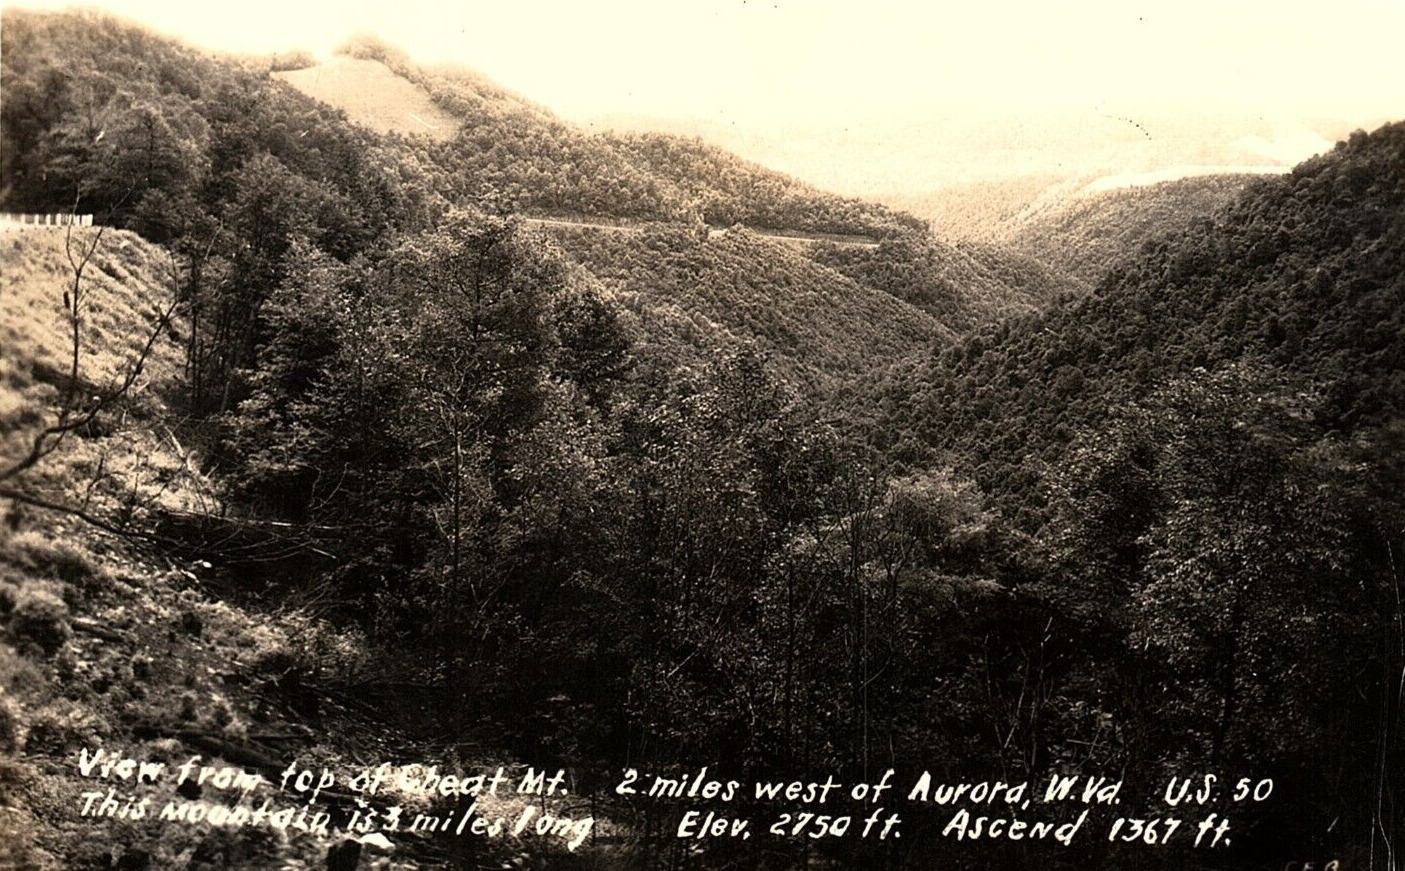 1940s AURORA WEST VIRGINIA CHEAT MT. U.S. 50 HWY PHOTO RPPC POSTCARD 44-193